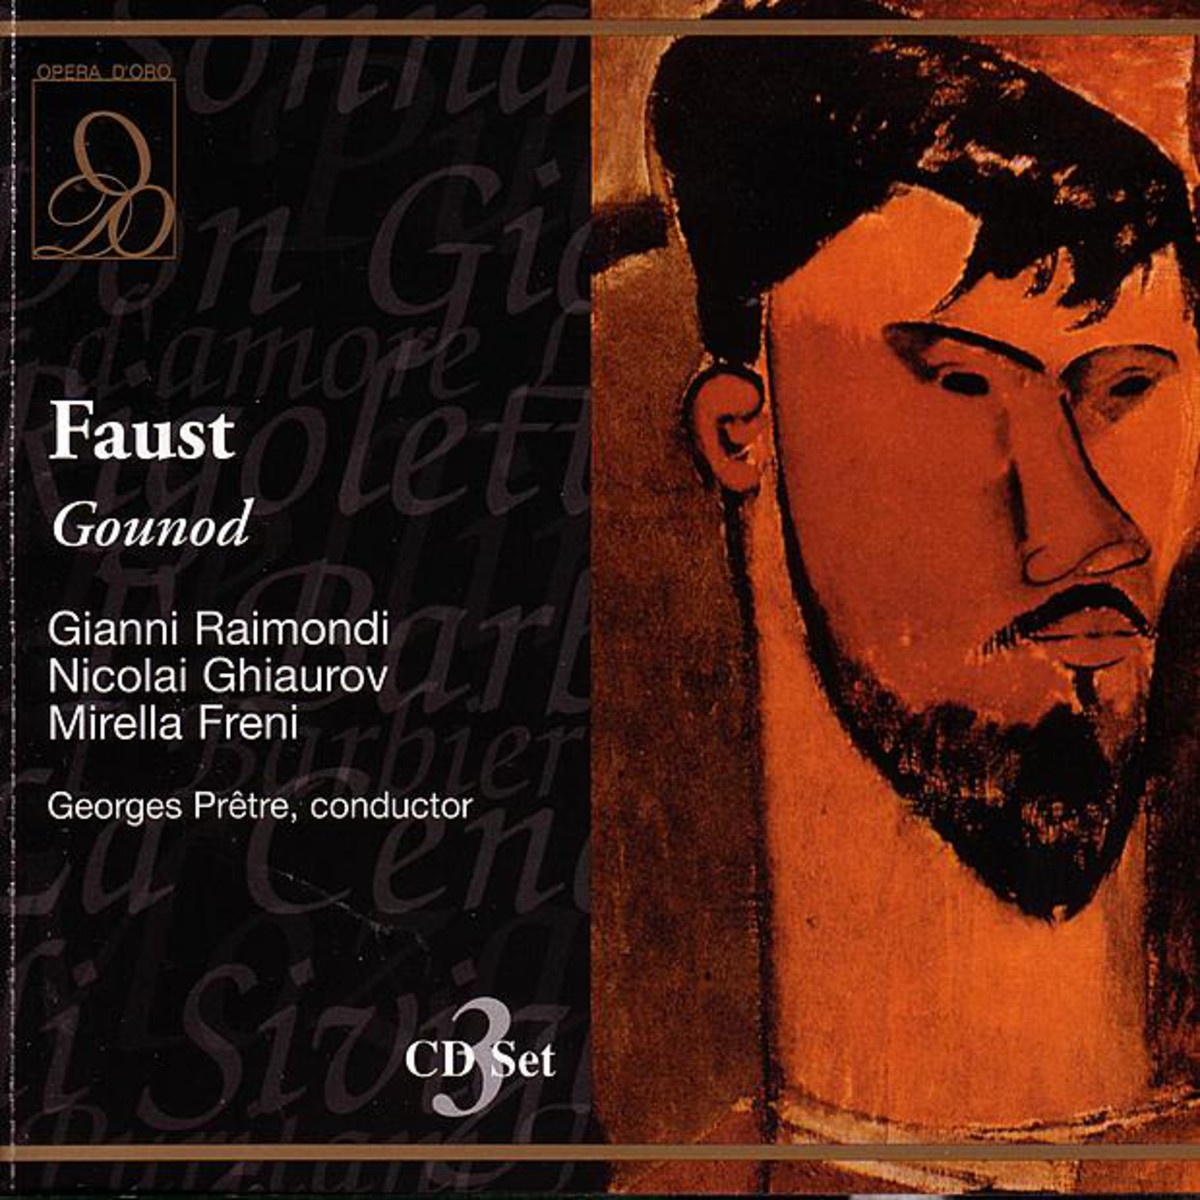 Faust 1986 Digital Remaster, Act V: Dans les bruye res Choeur Faust Me phistophe le s